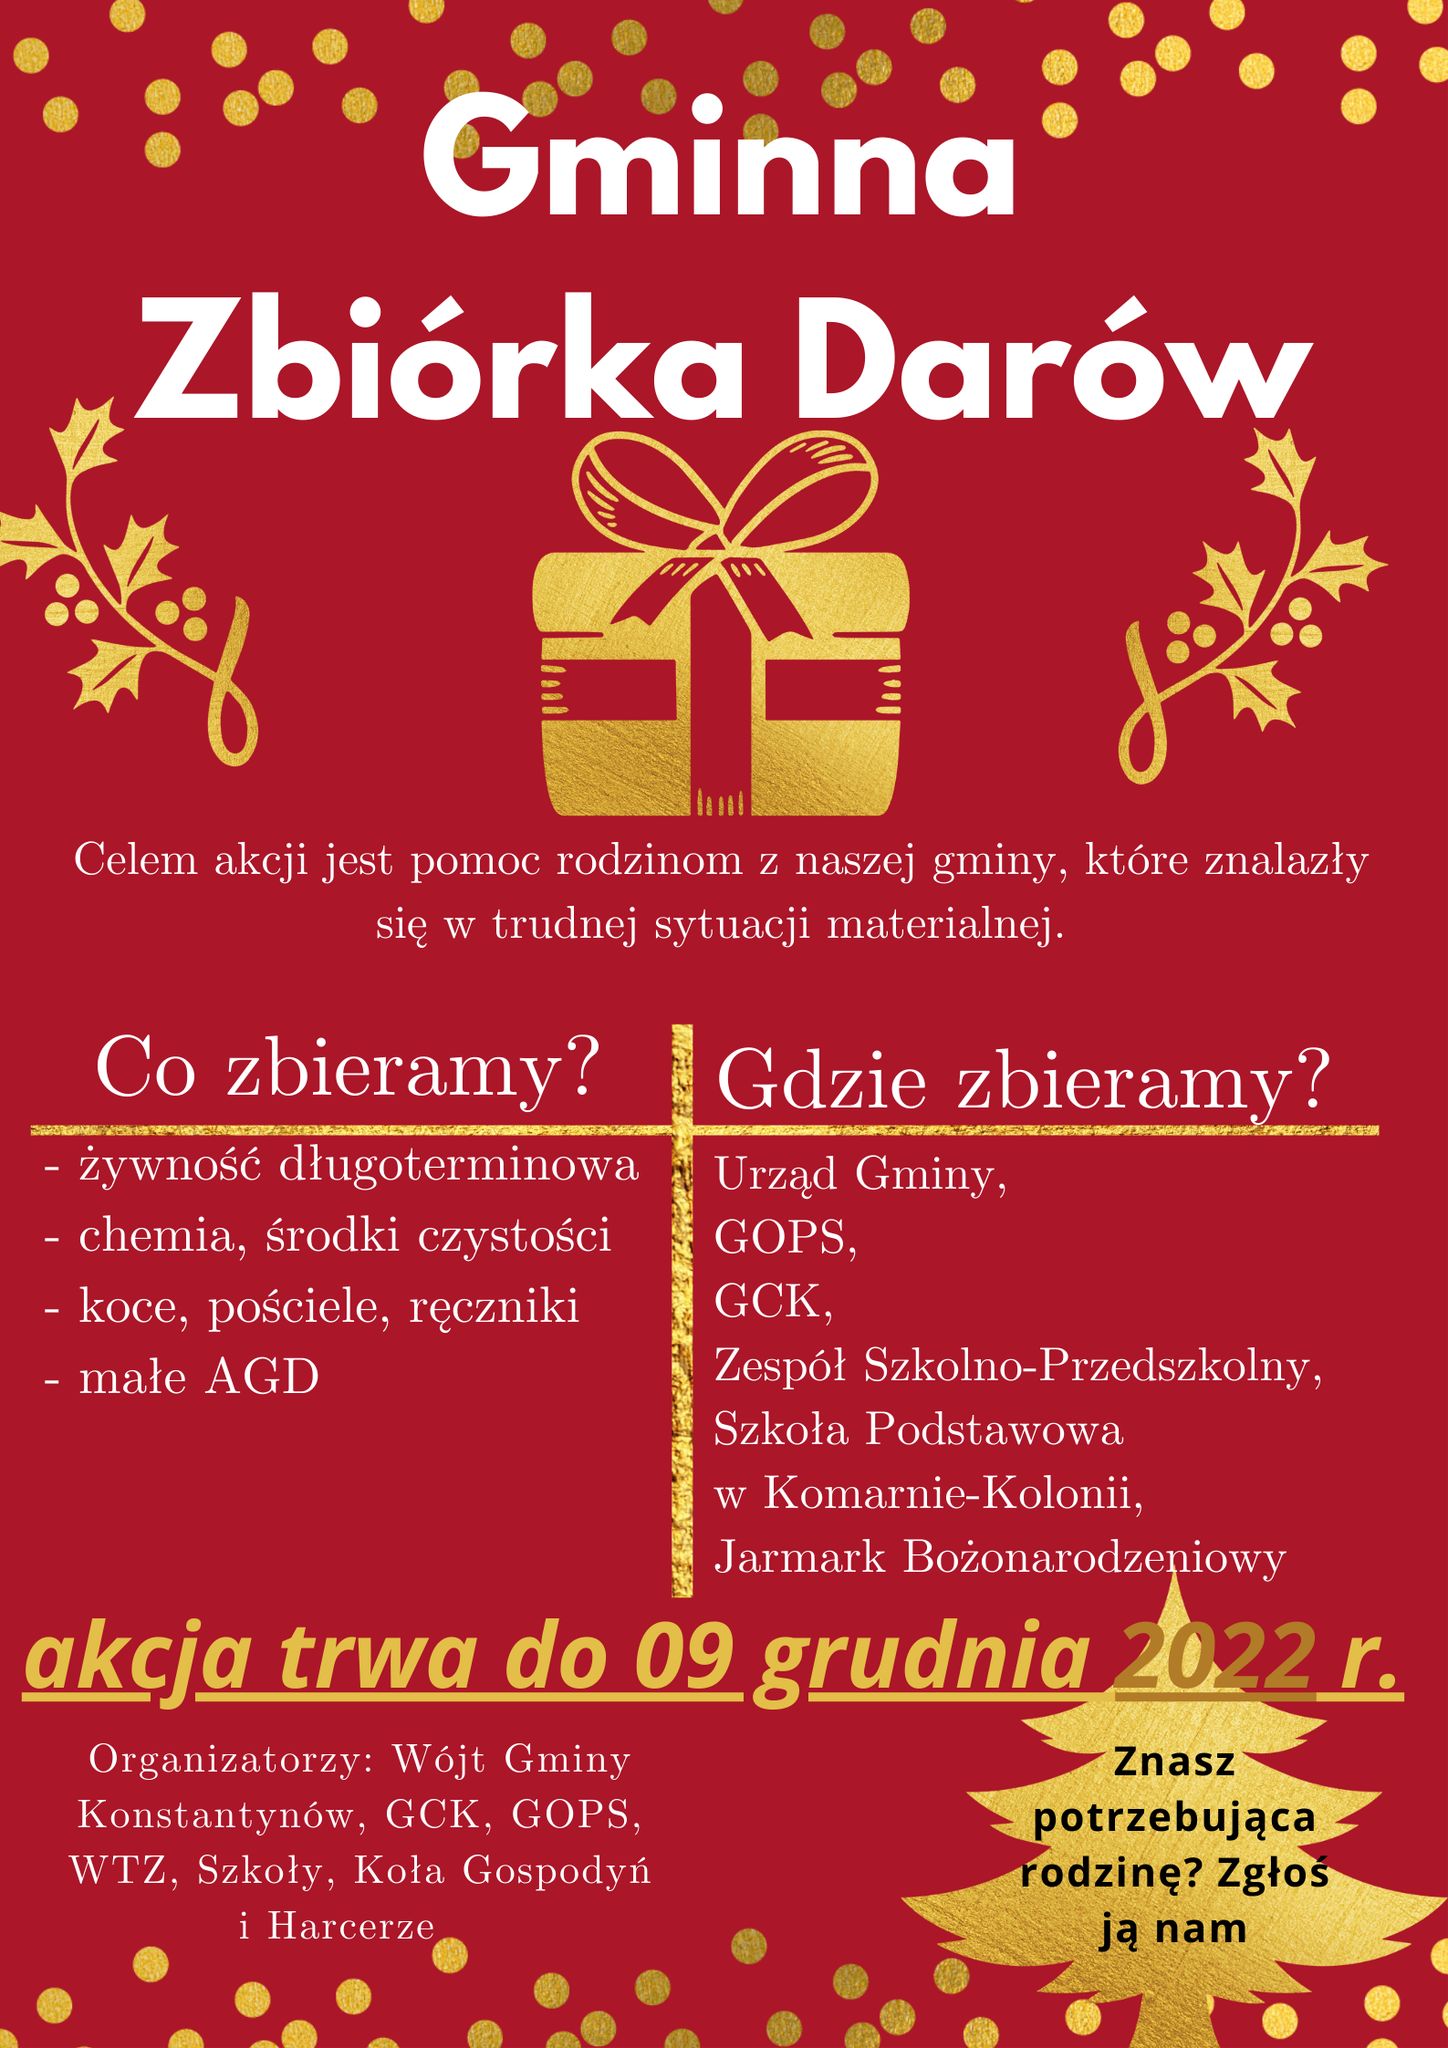 You are currently viewing Gminna Zbiórka Darów